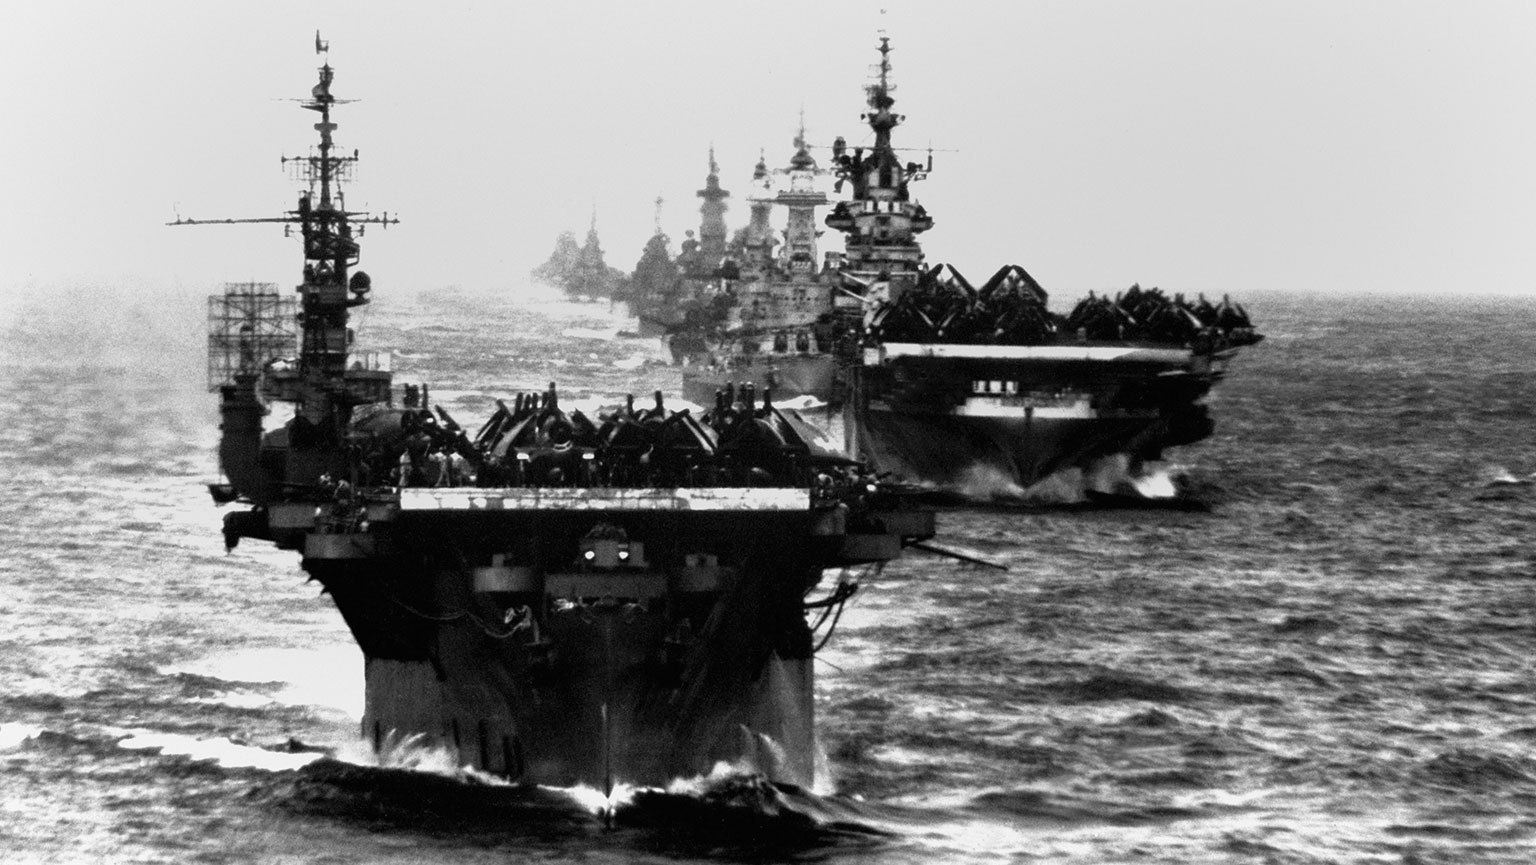 royal navy at war - pacific & east indies fleets